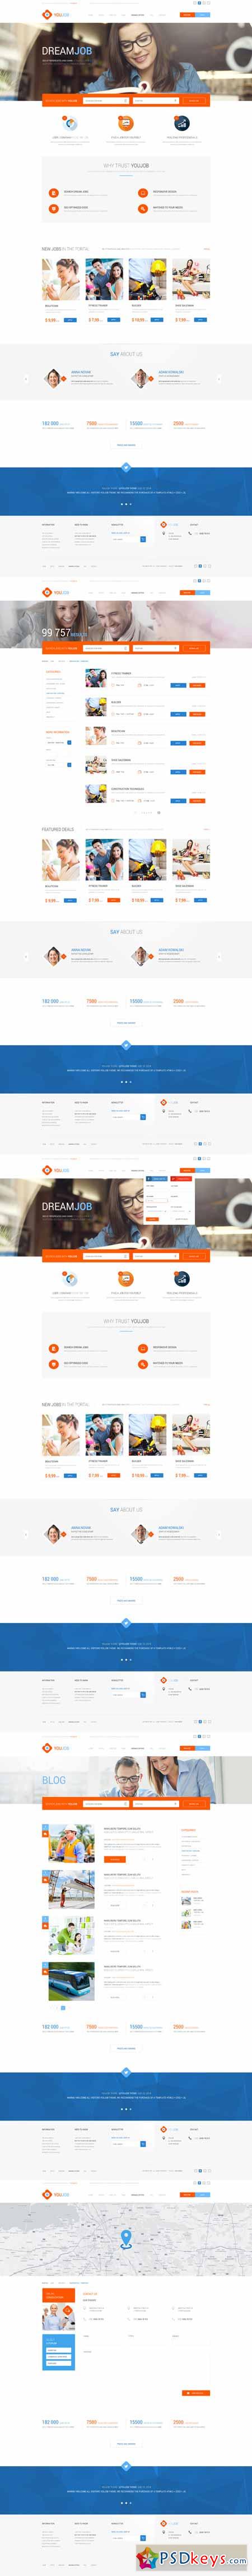 YouJob - Job Portal (HTML+PSD) 281973